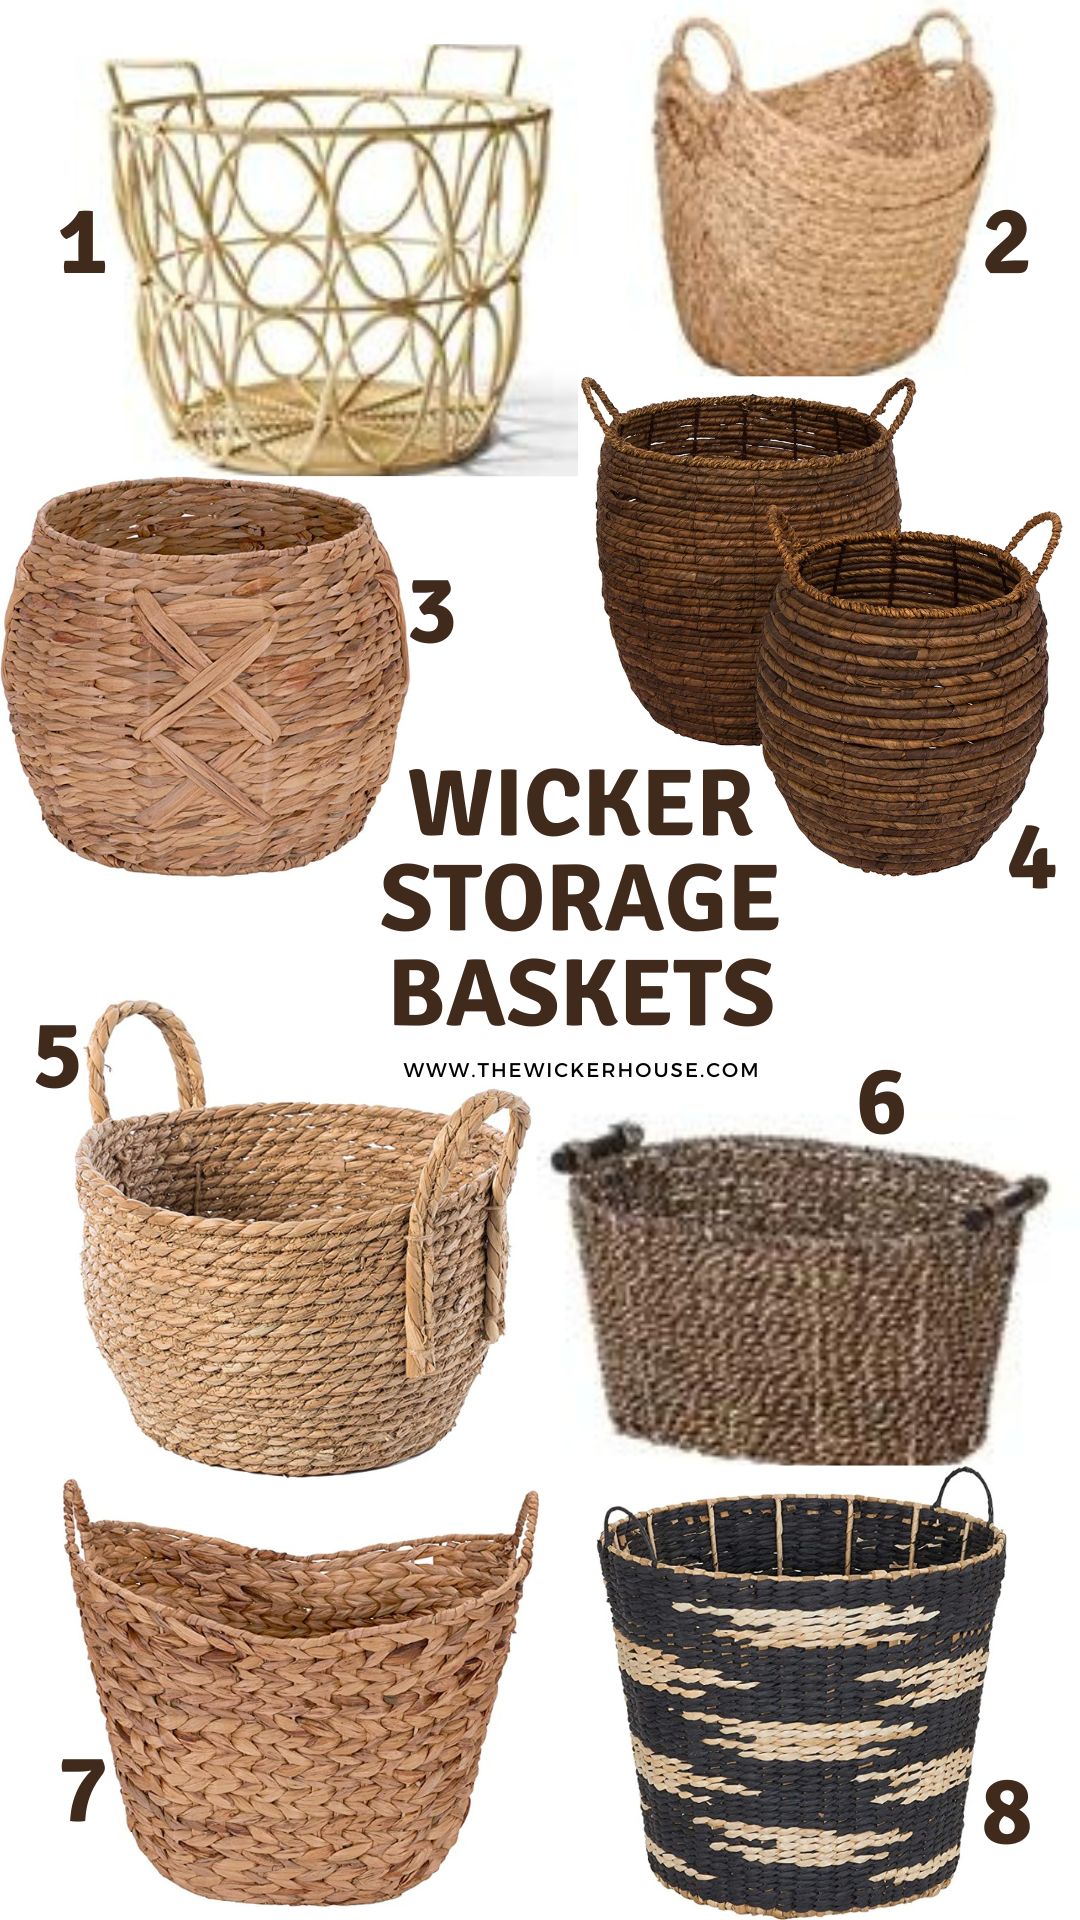 Wicker Storage Baskets - The Wicker House